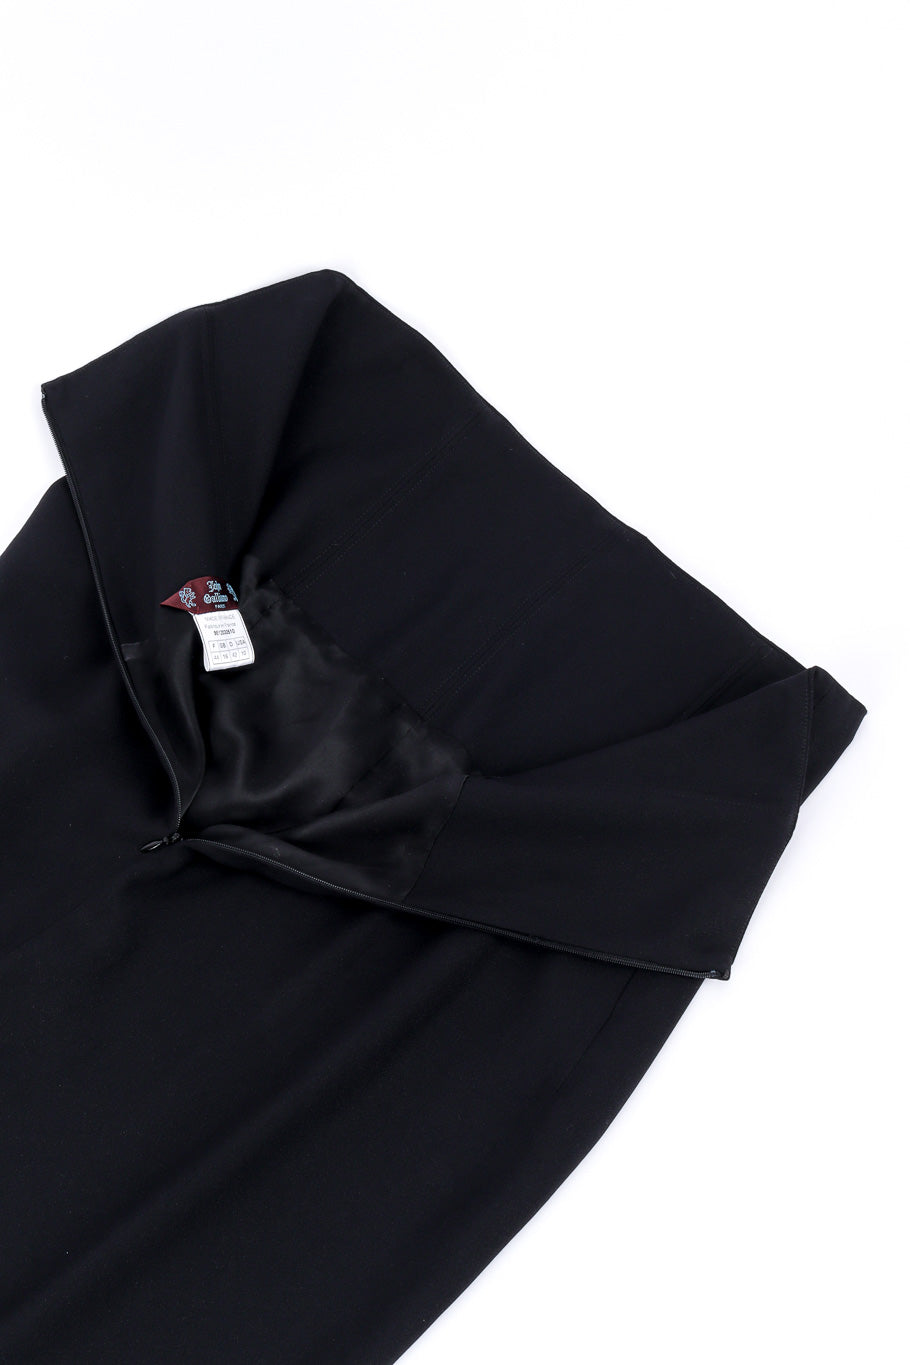 Vintage John Galliano 1999 S/S Draped Skirt back unzipped @recessla